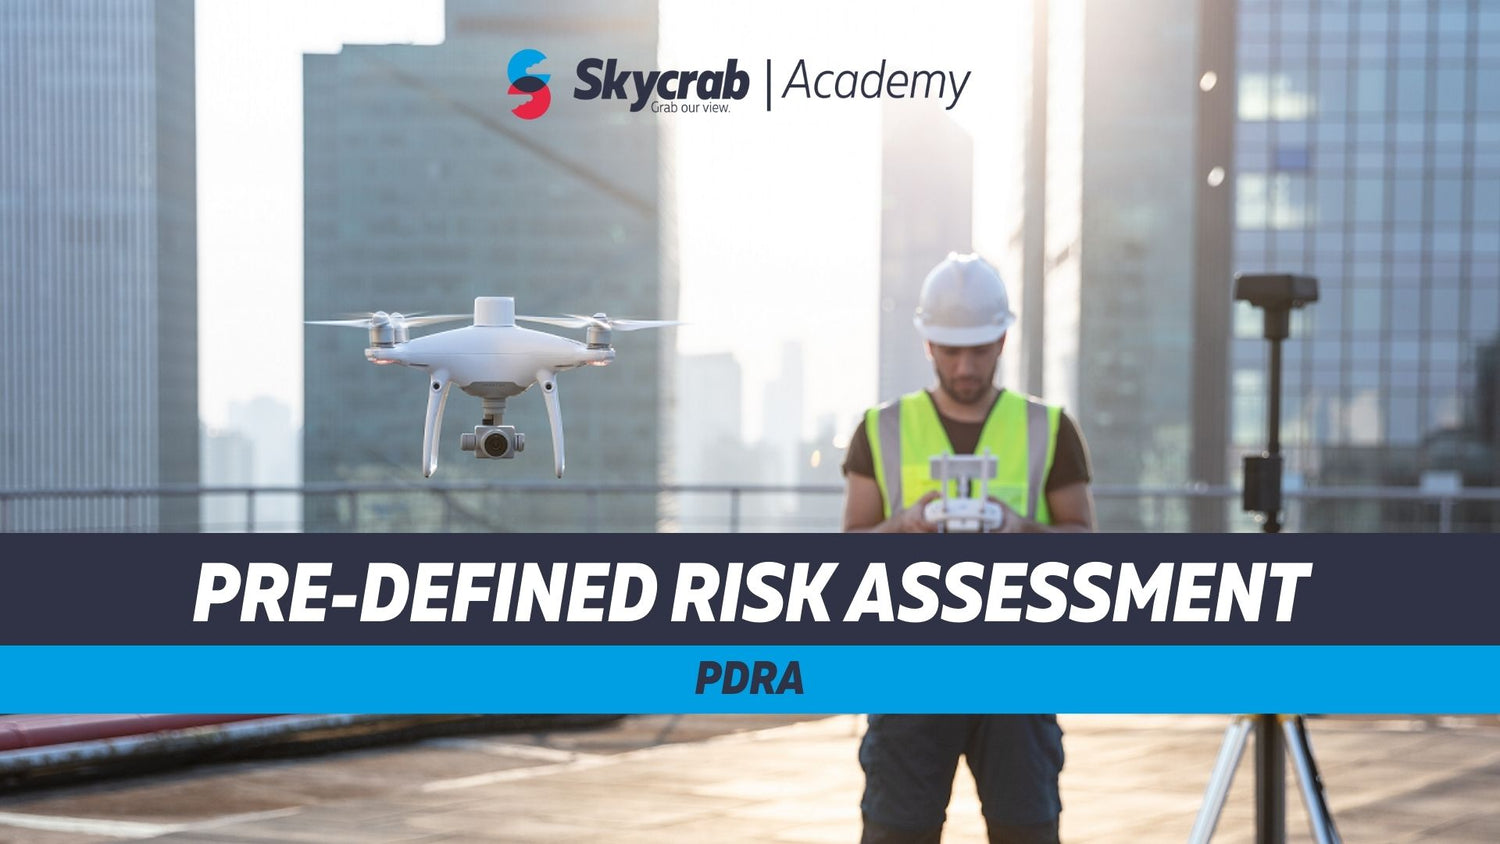 Pre-defined Risk Assessment (PDRA)